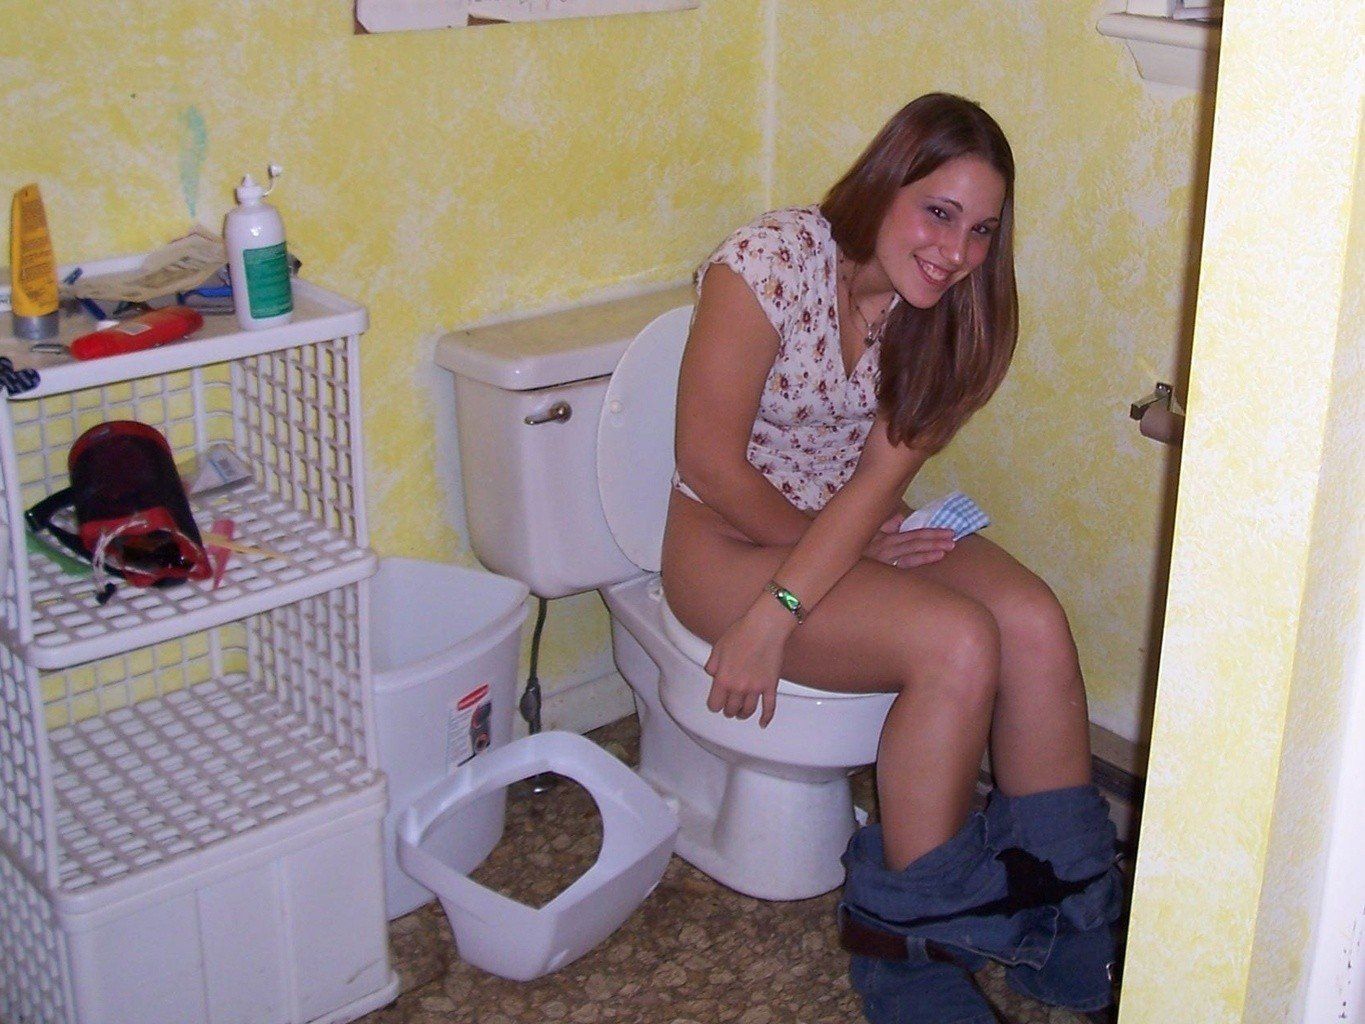 Girls sitting the toilet